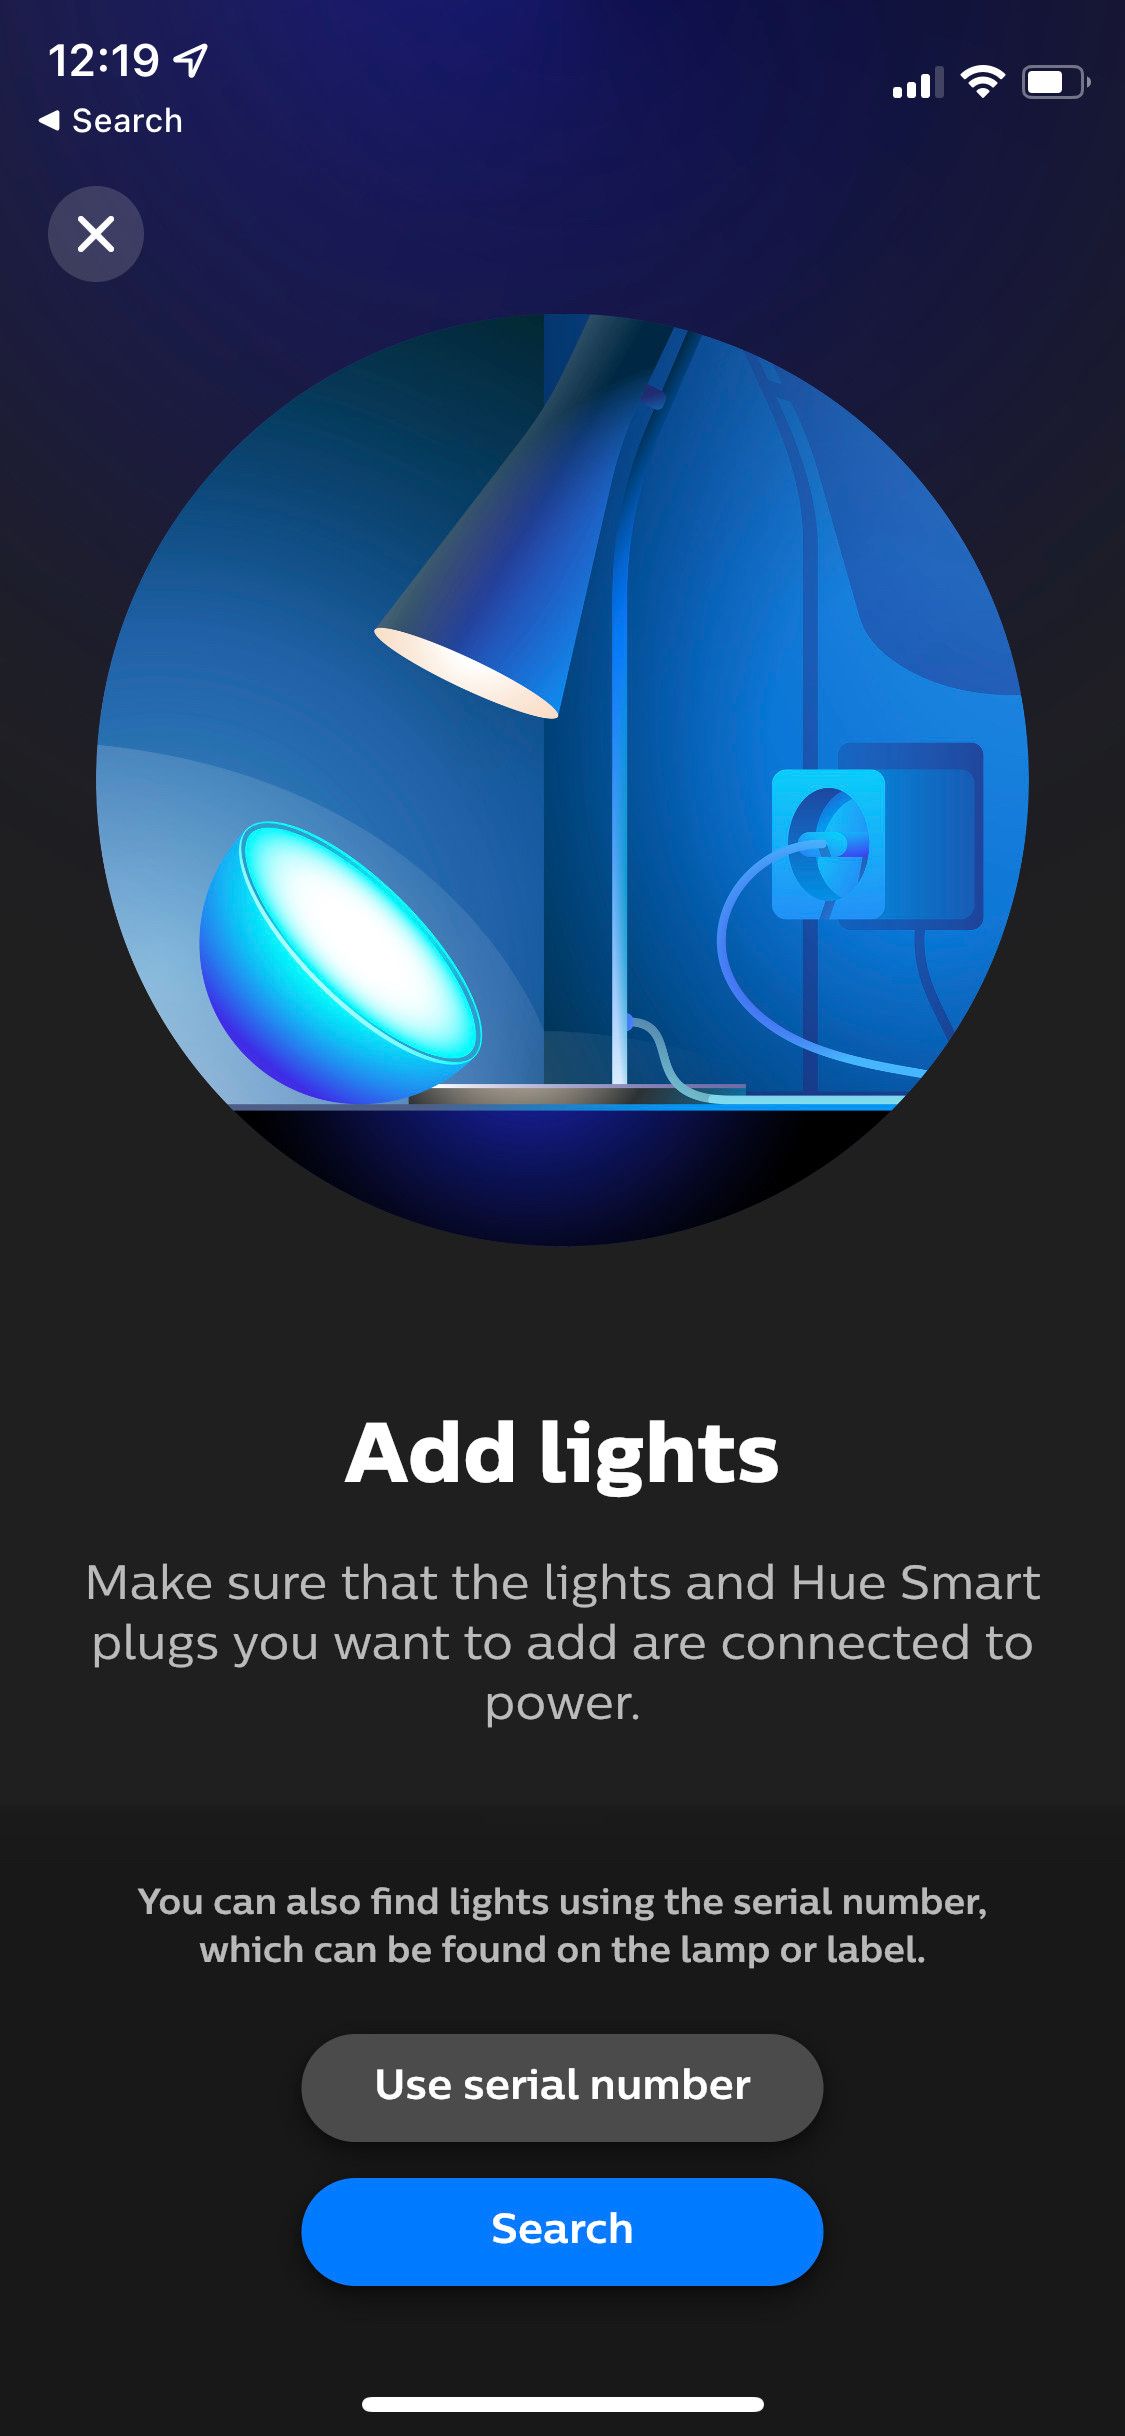 Add Lights screen in Philips Hue app